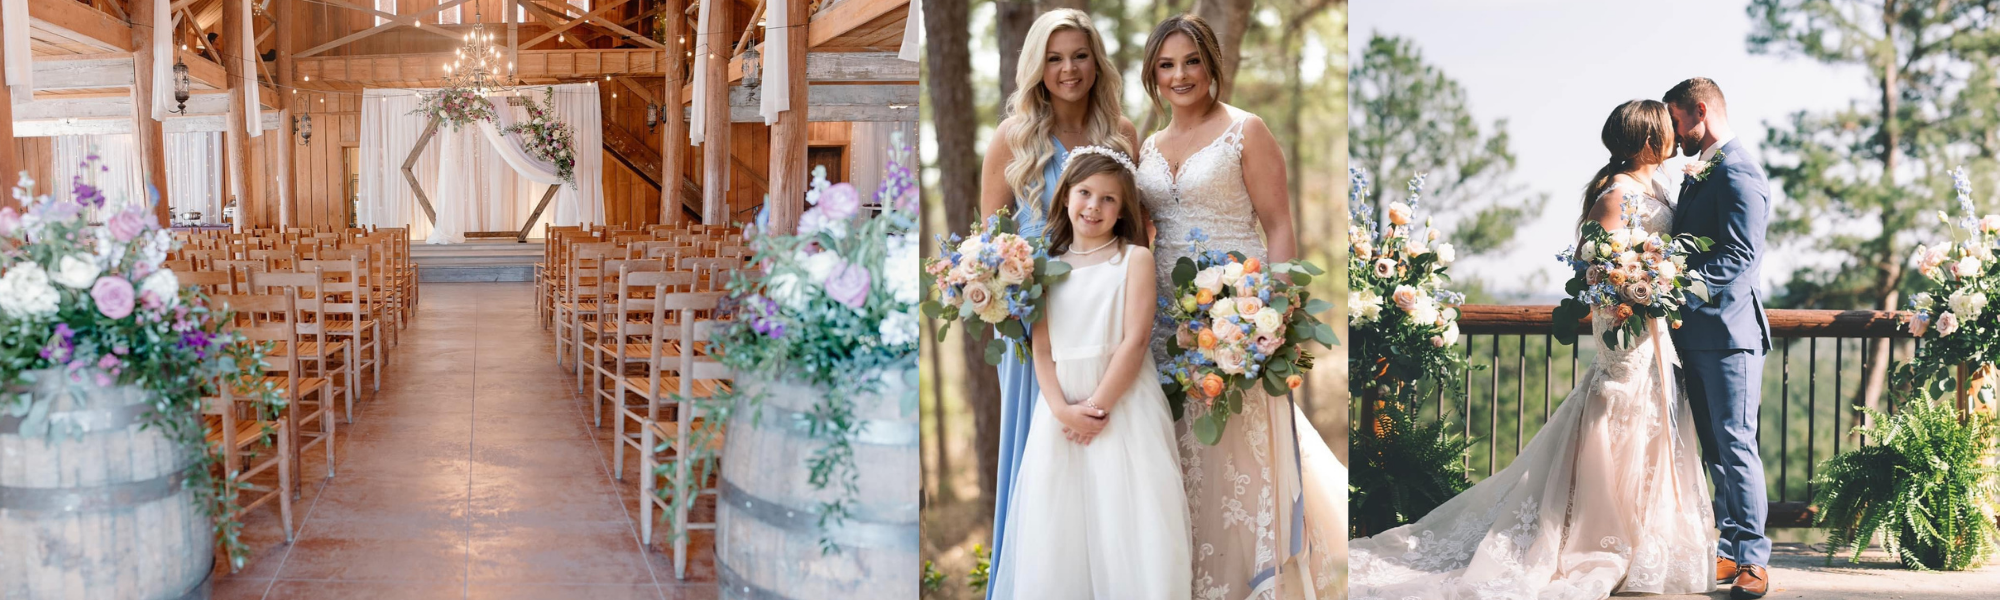 wedding photo collage 